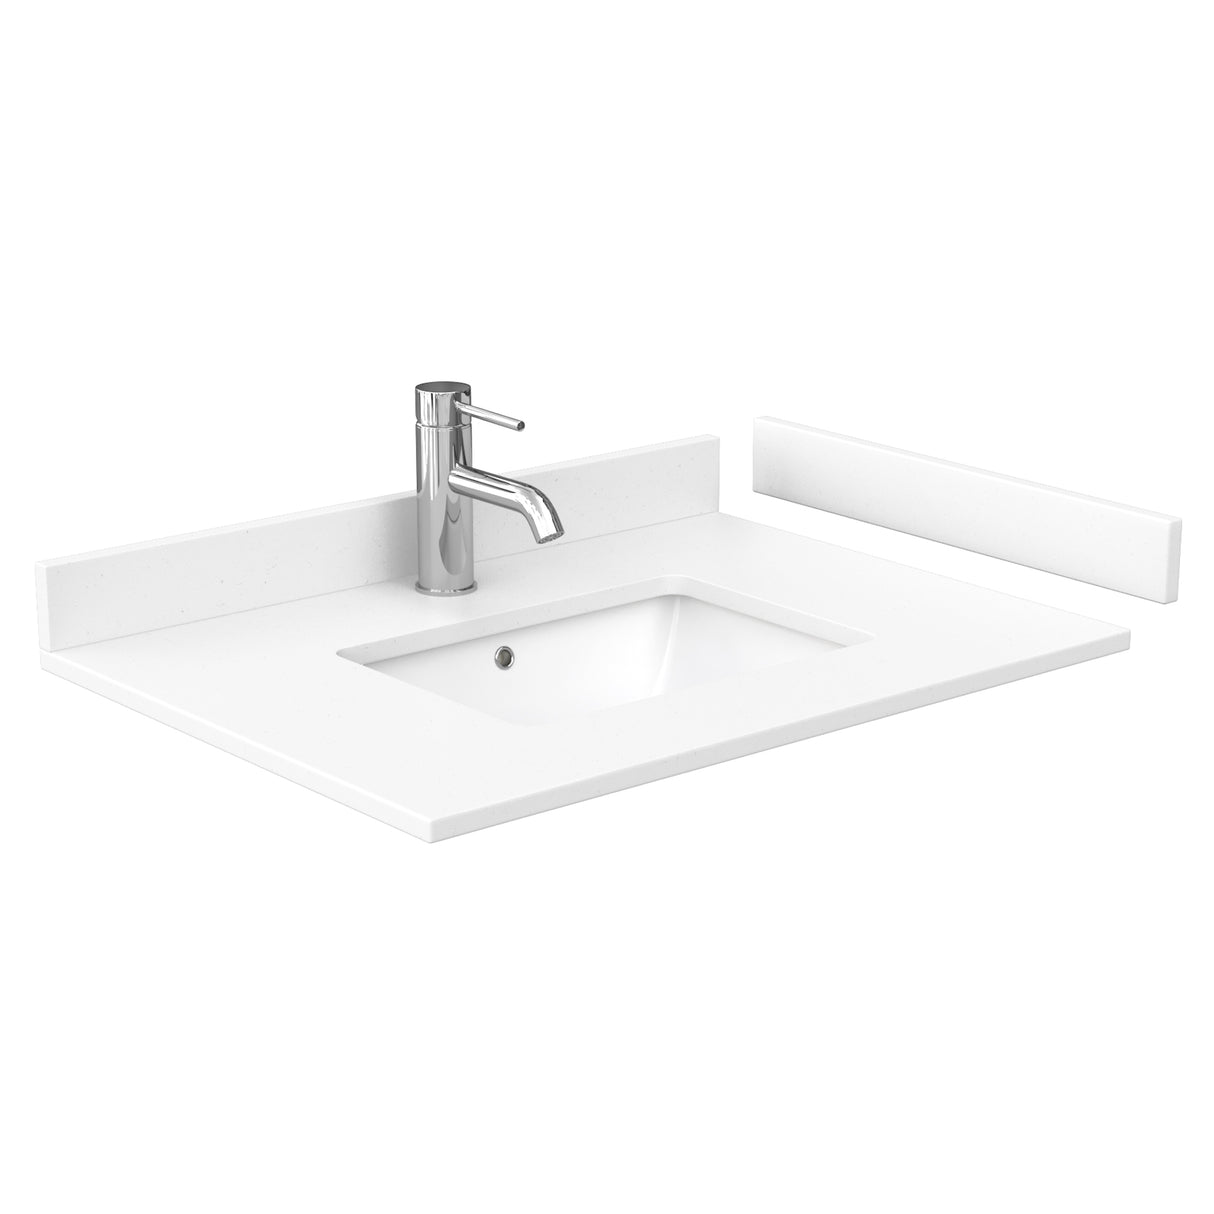 Beckett 30 Inch Single Bathroom Vanity in White White Cultured Marble Countertop Undermount Square Sink Matte Black Trim